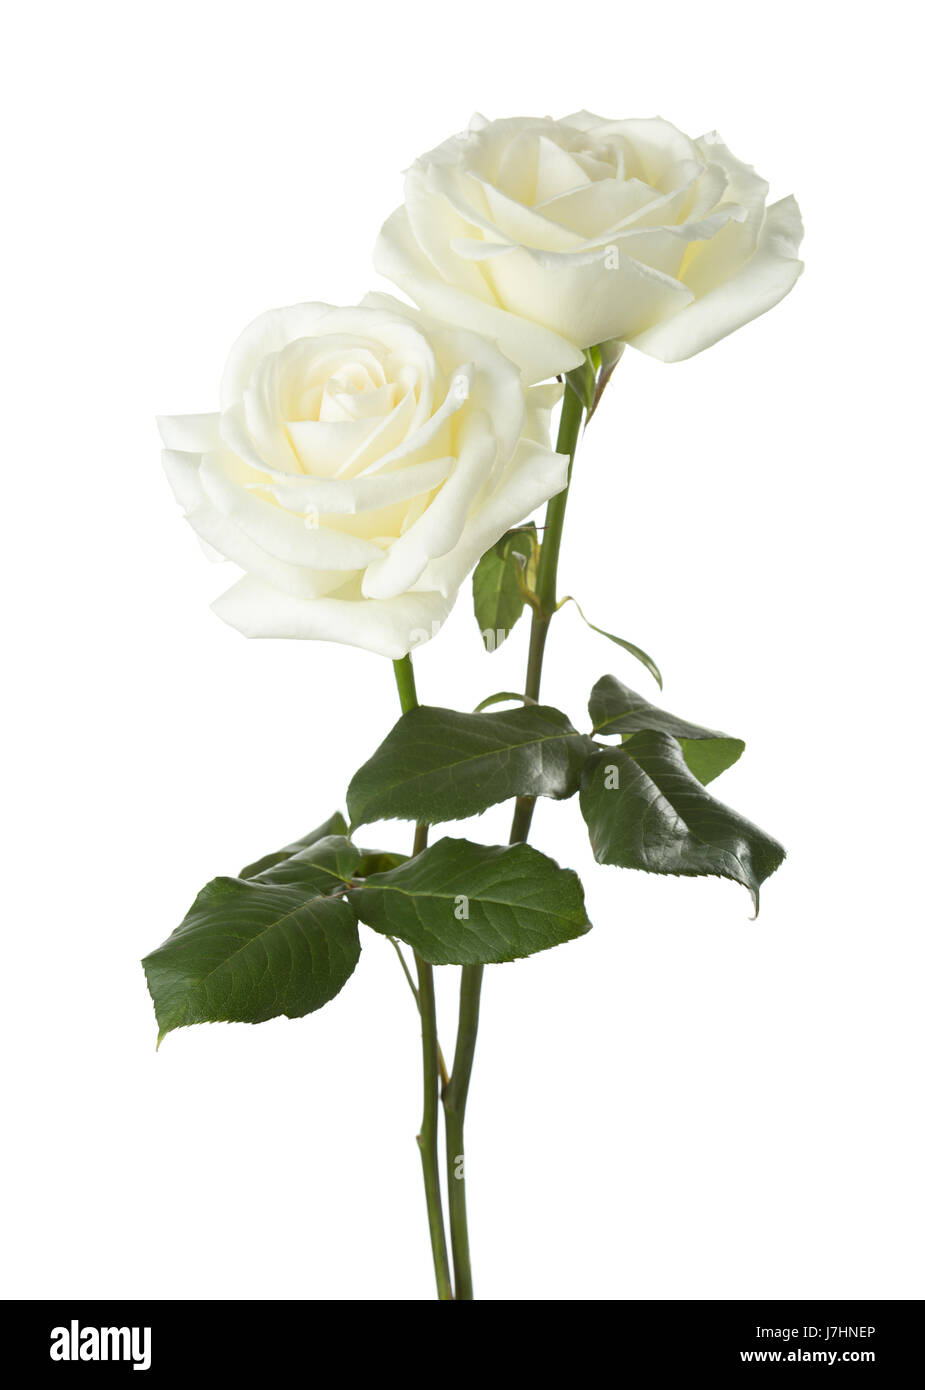 Dos rosas blancas fotografías e imágenes de alta resolución - Alamy